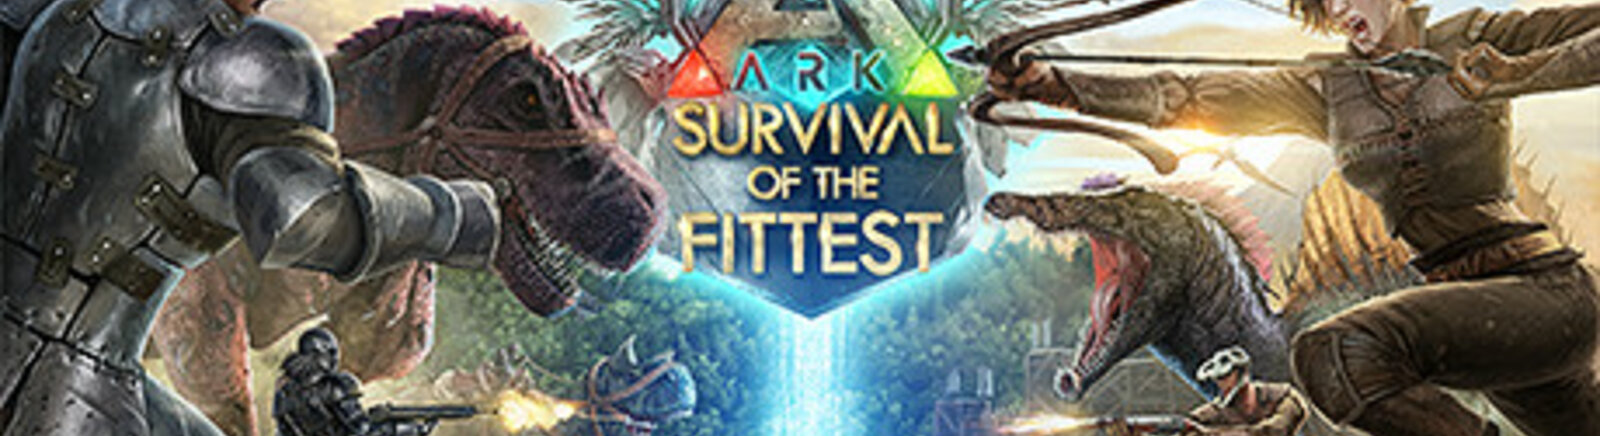 Дата выхода ARK: Survival Of The Fittest  на PC, PS4 и Mac в России и во всем мире